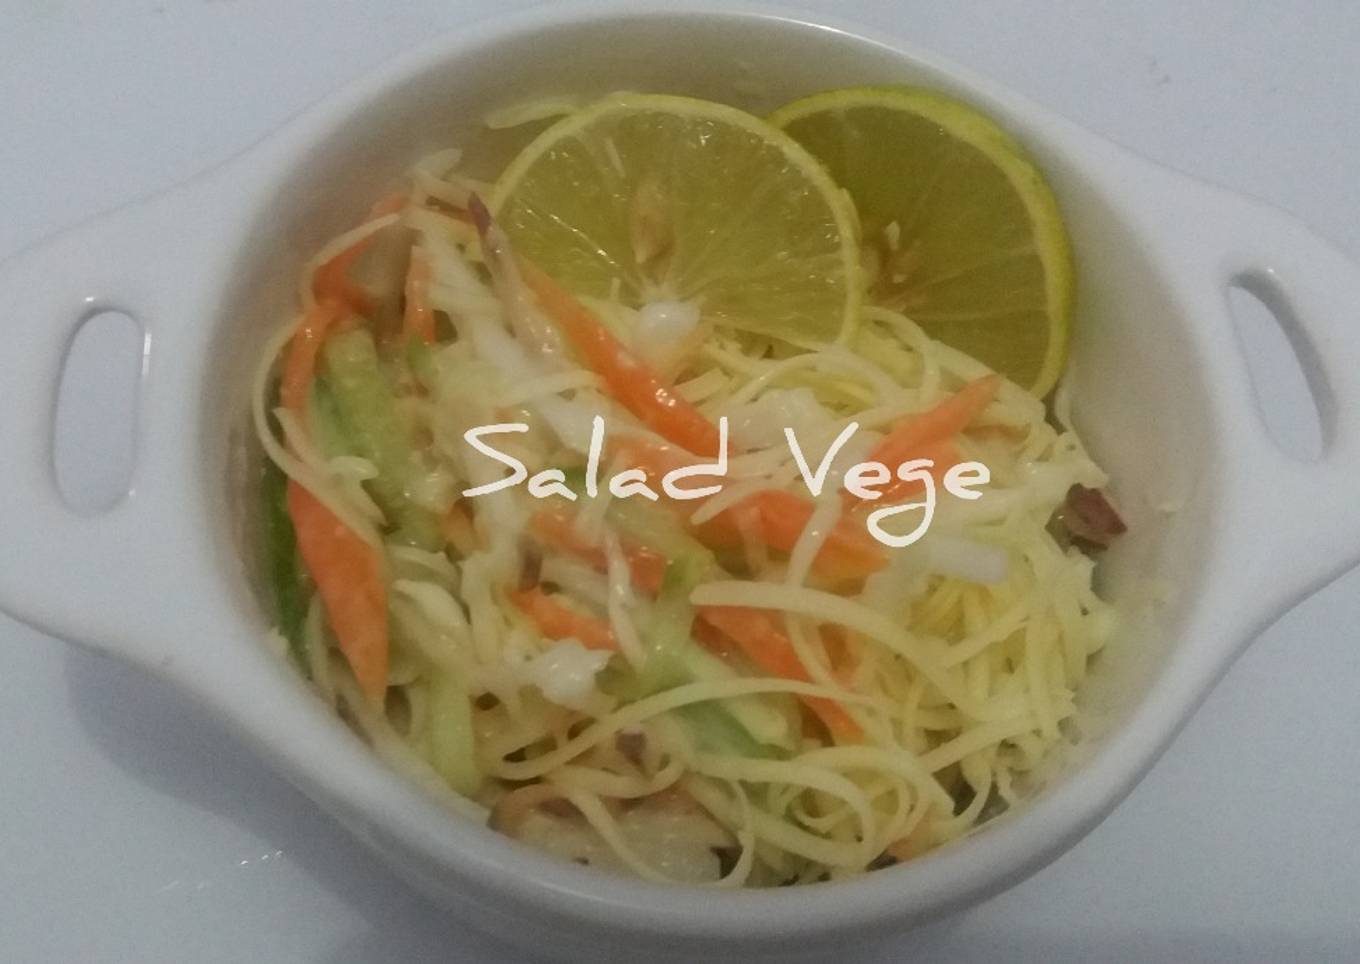 Salad Vege